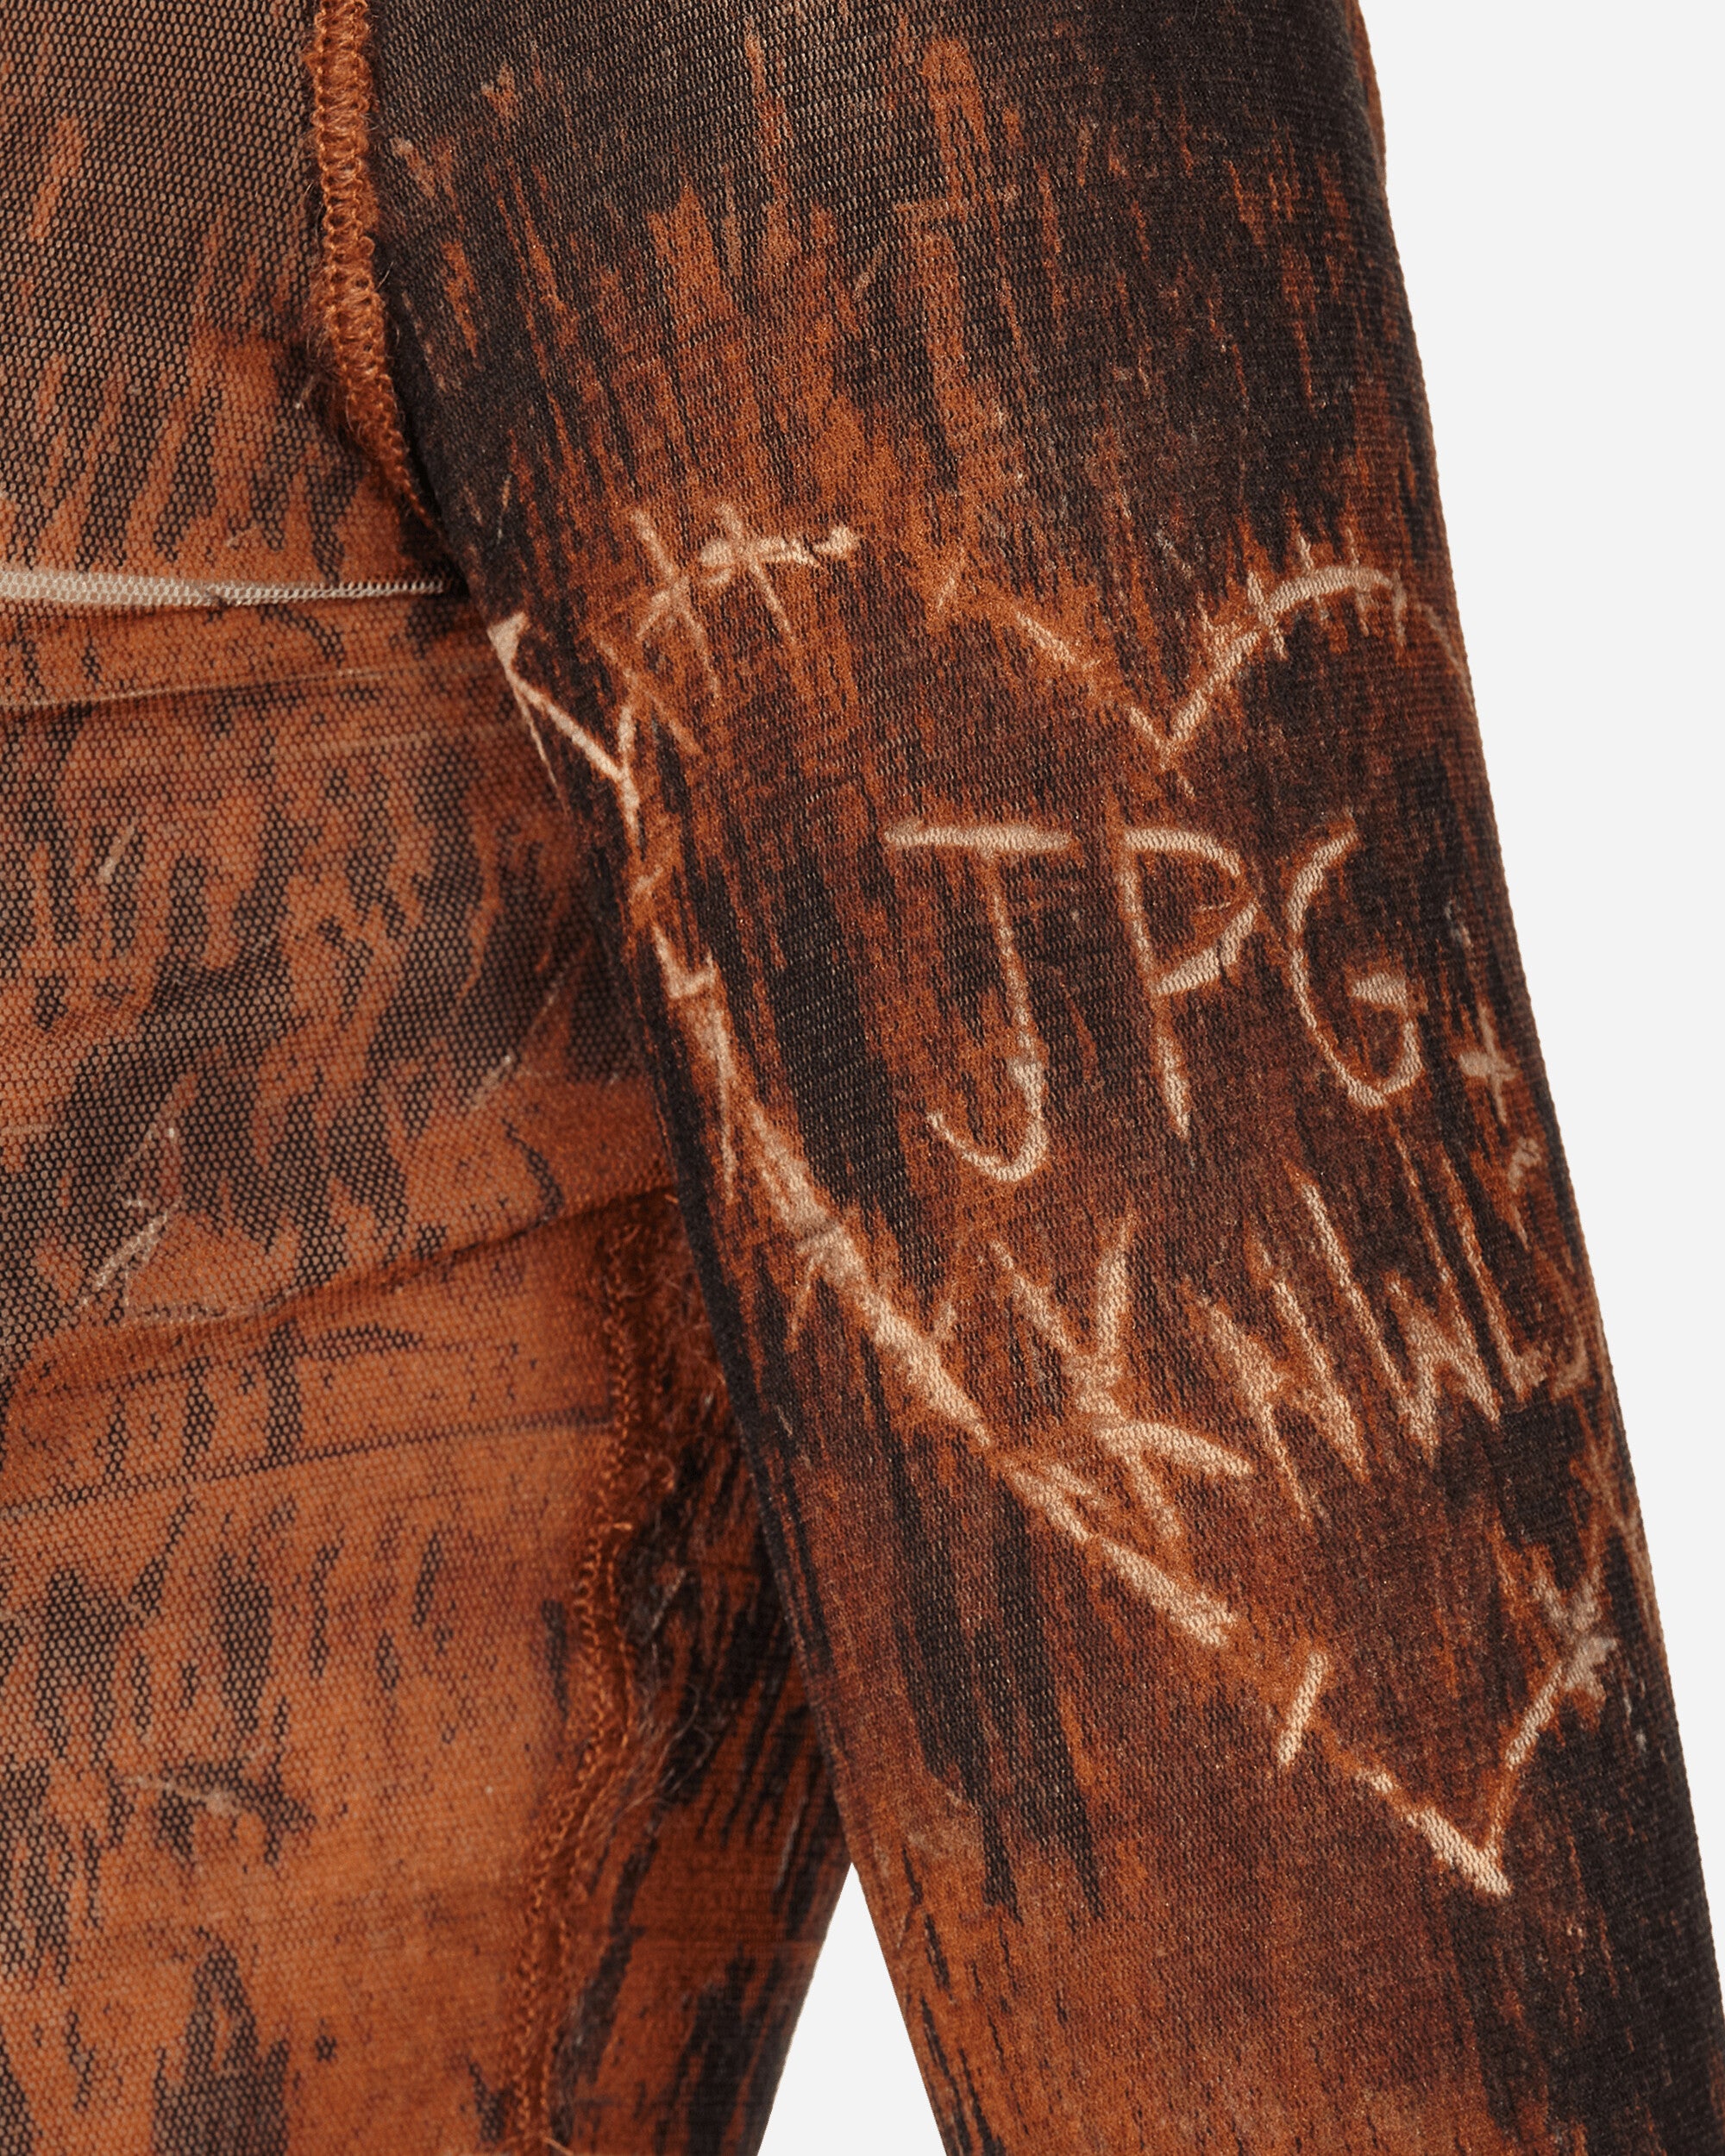 Jean Paul Gaultier Wmns Knwls Cropped Top Boat Neck Long Sleeves Printed Scratch Wood Brown/Ecru T-Shirts Longsleeve 2314-F-TO094-T534 6003